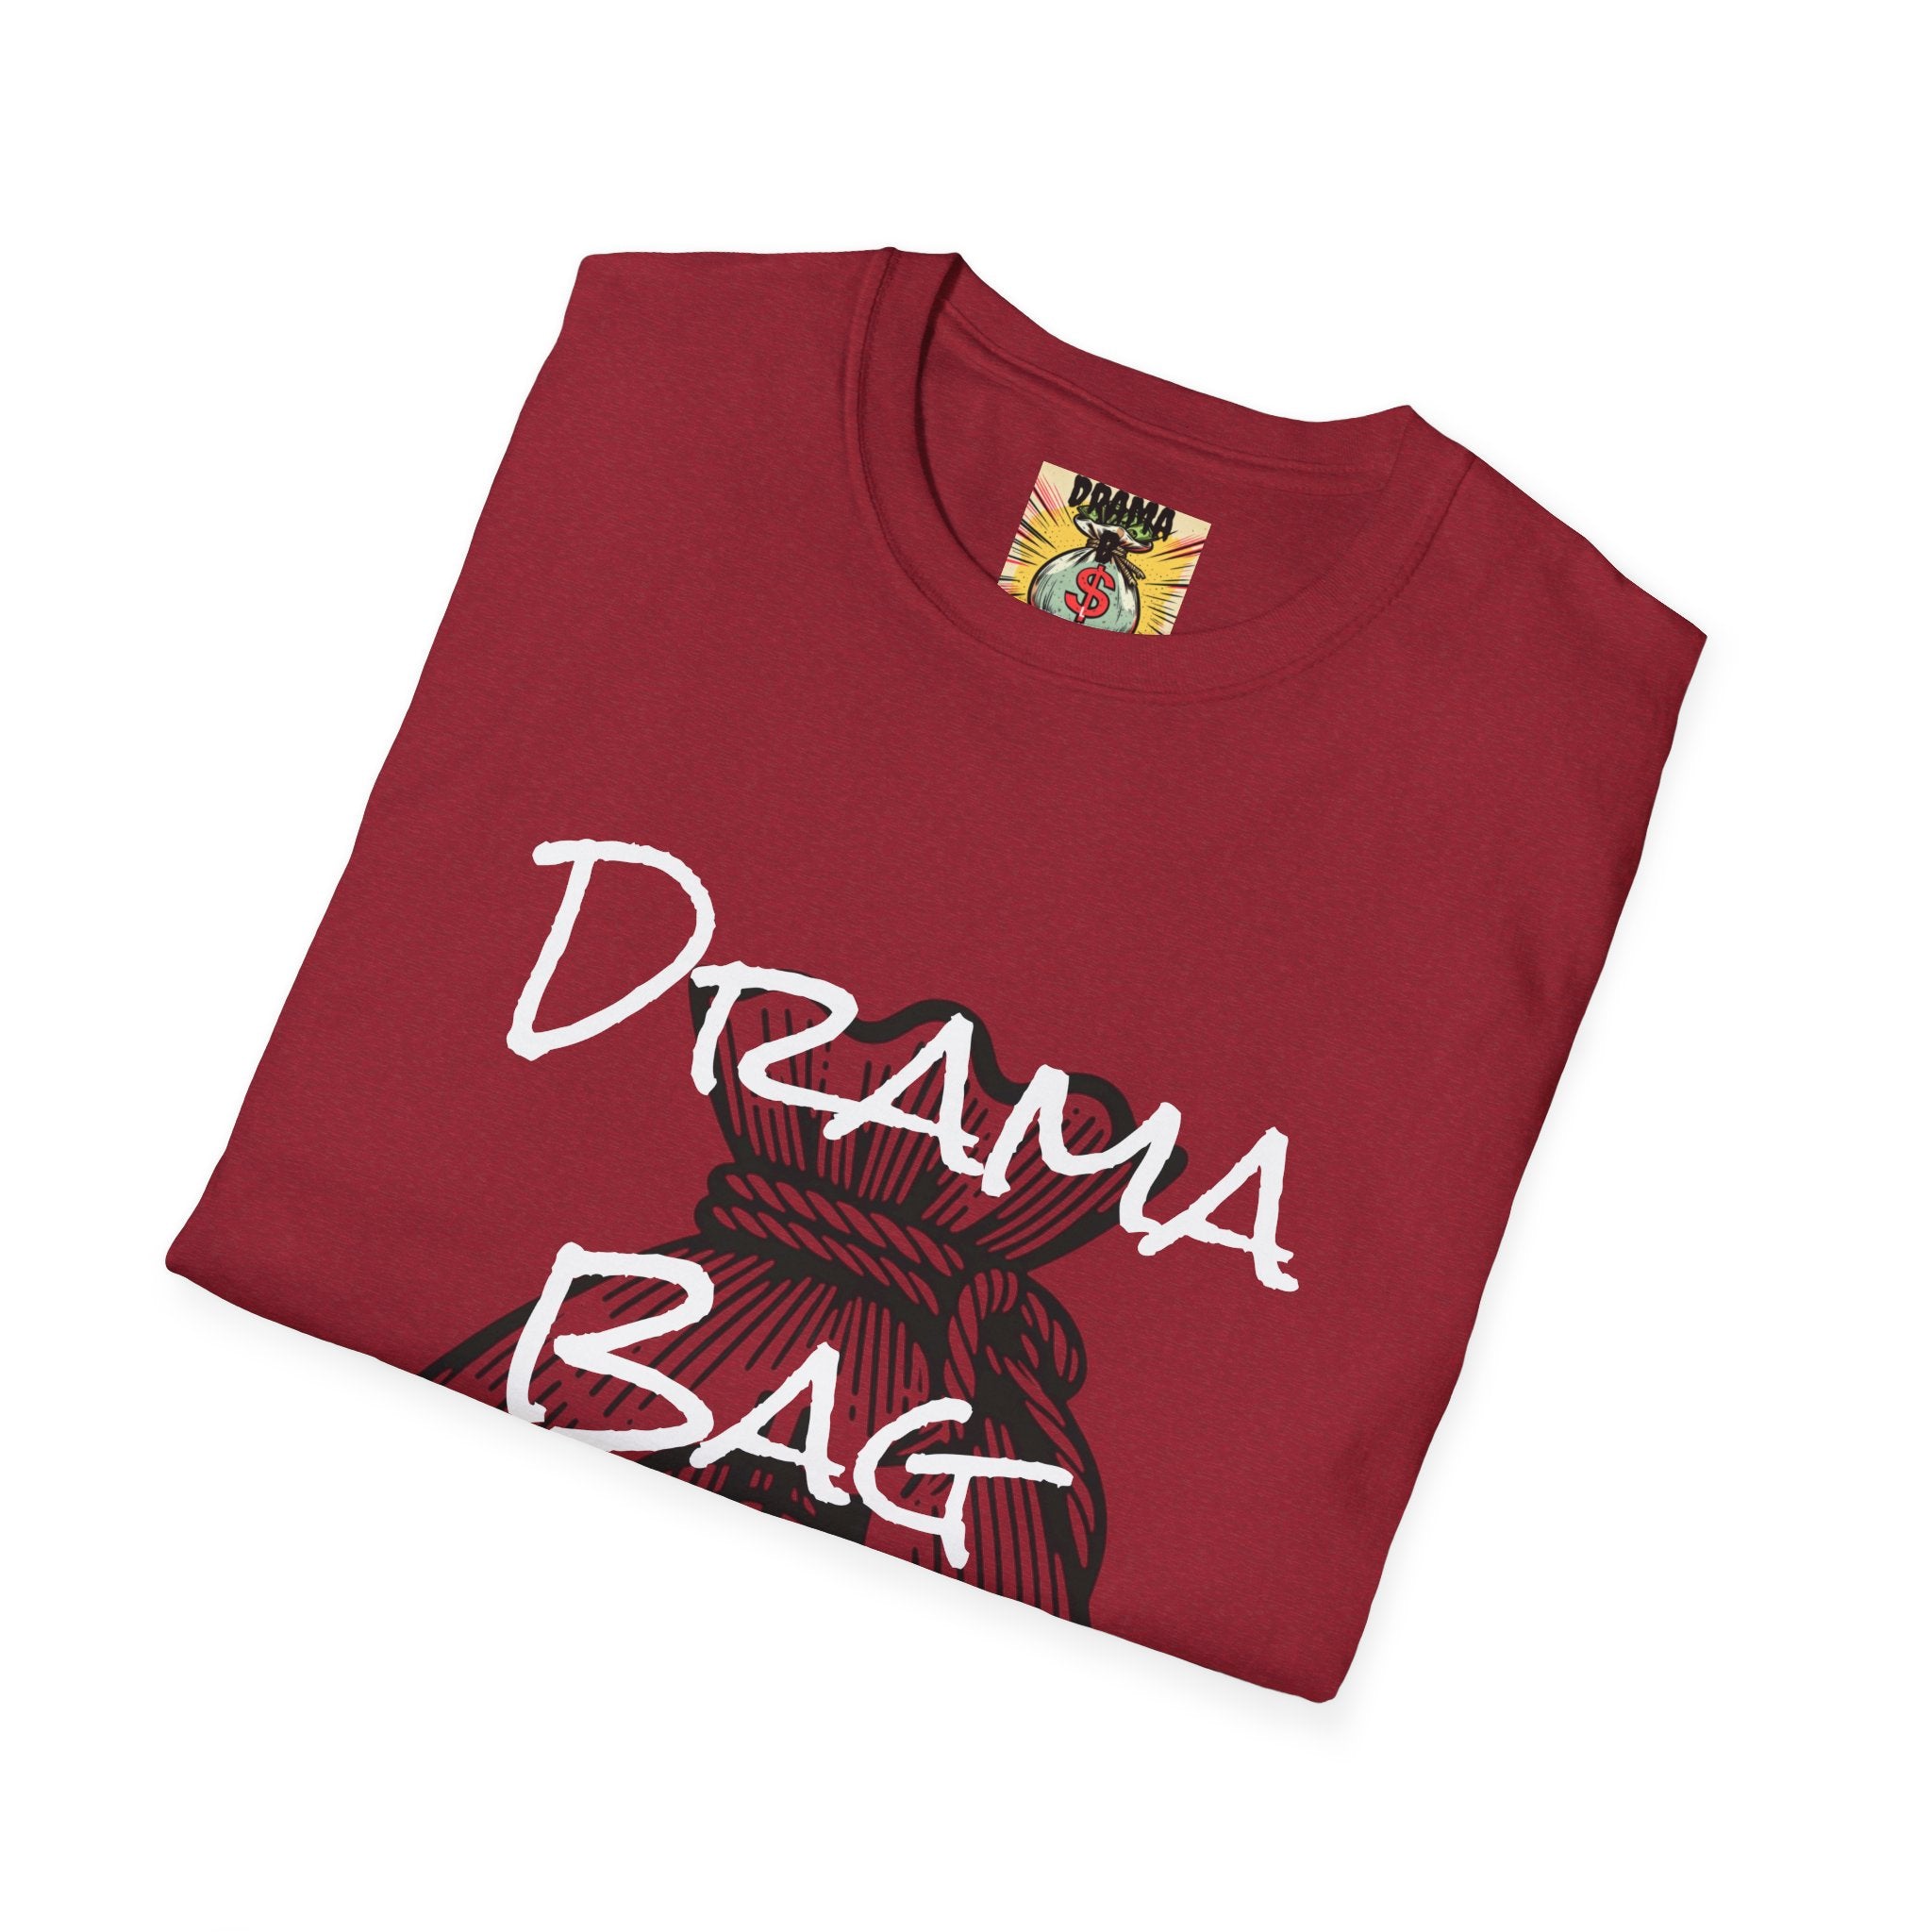 Drama Bag Red Pencil draw Money T-Shirt